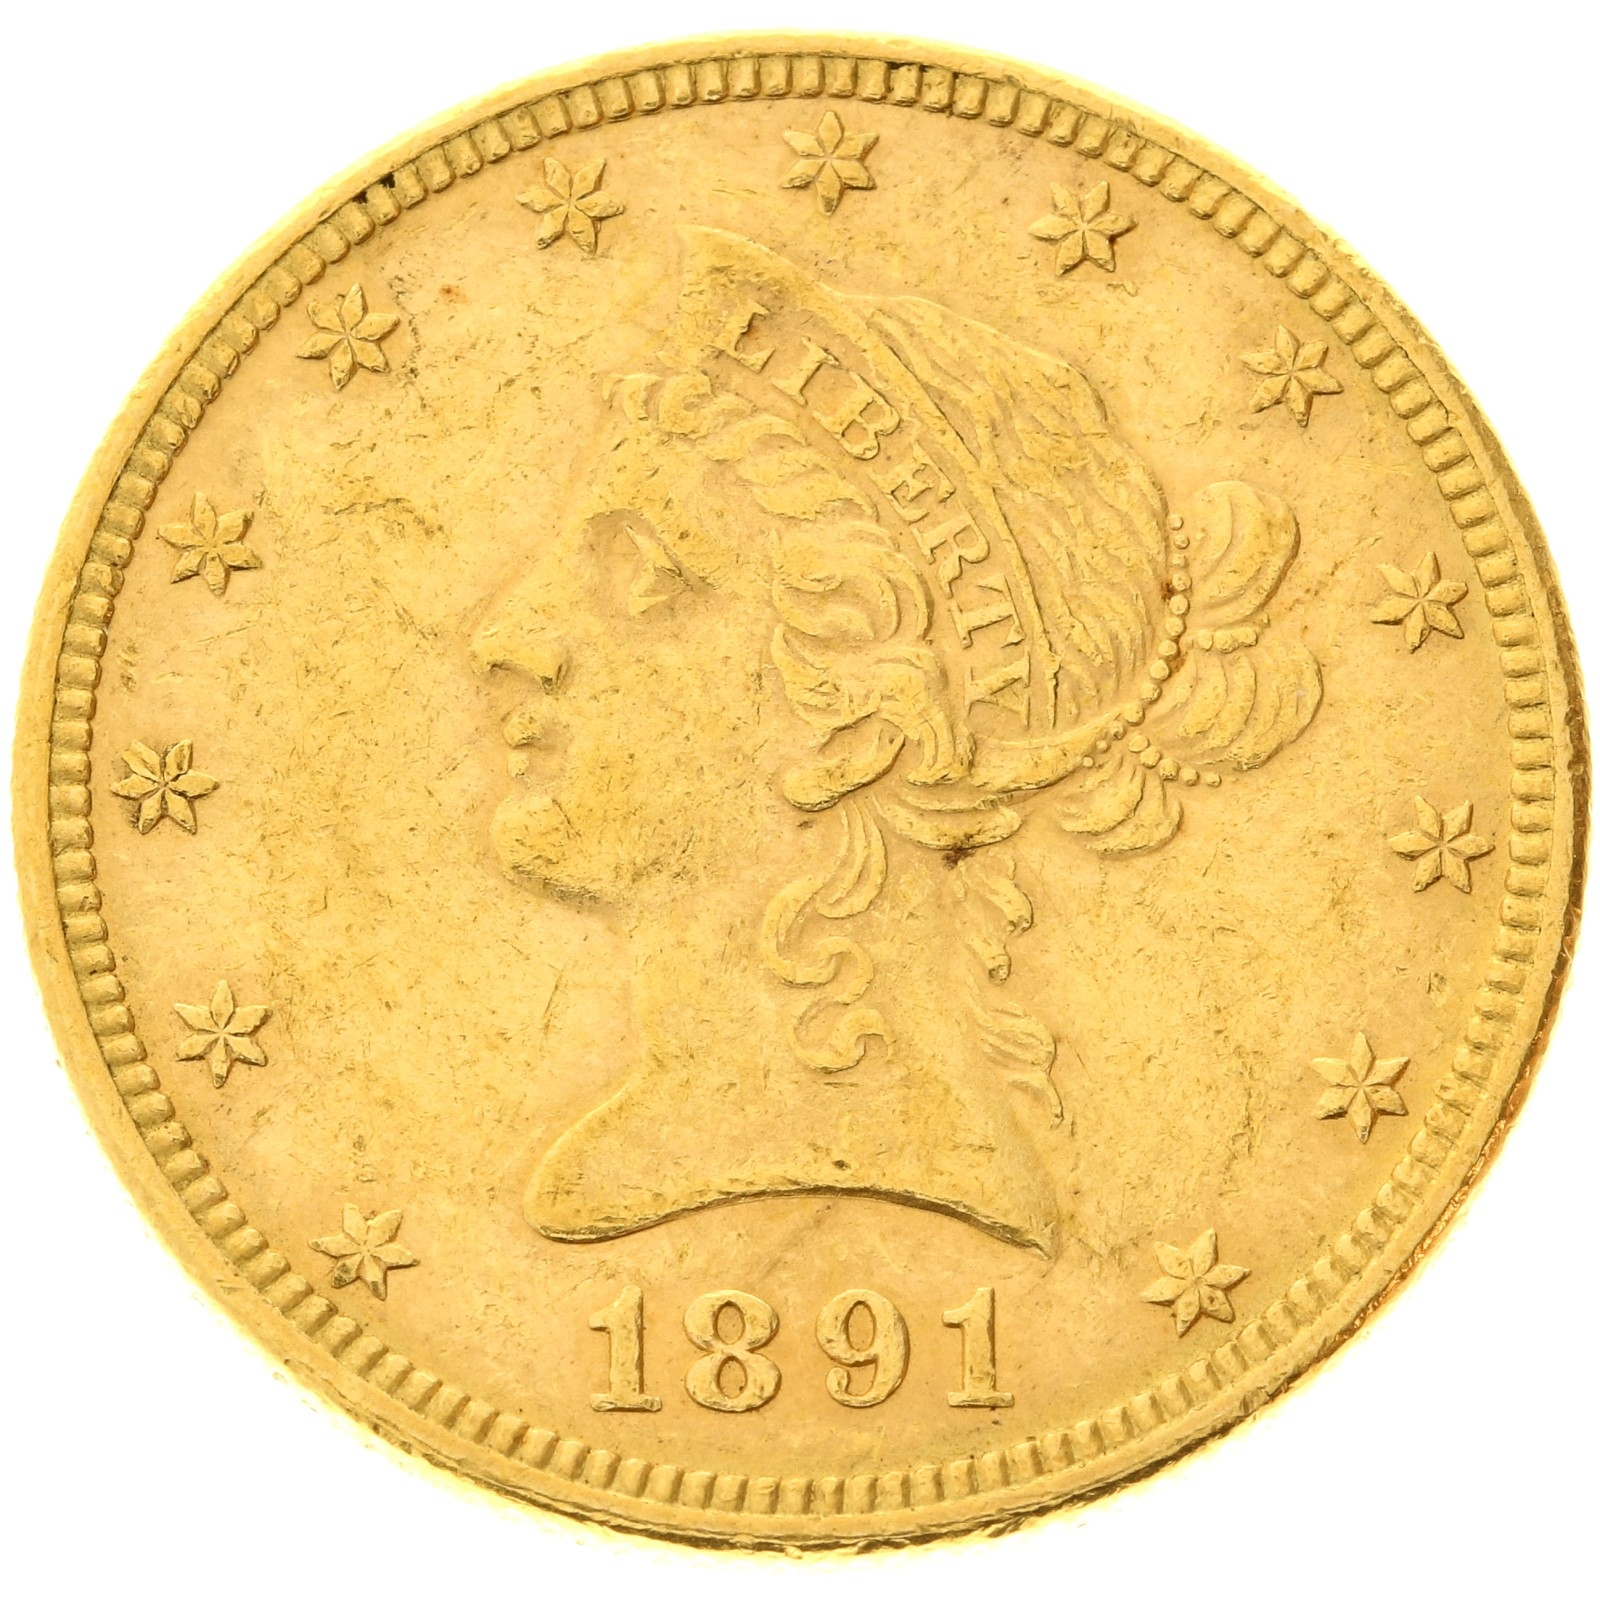 USA - 10 dollars - 1891 - Coronet Head Eagle